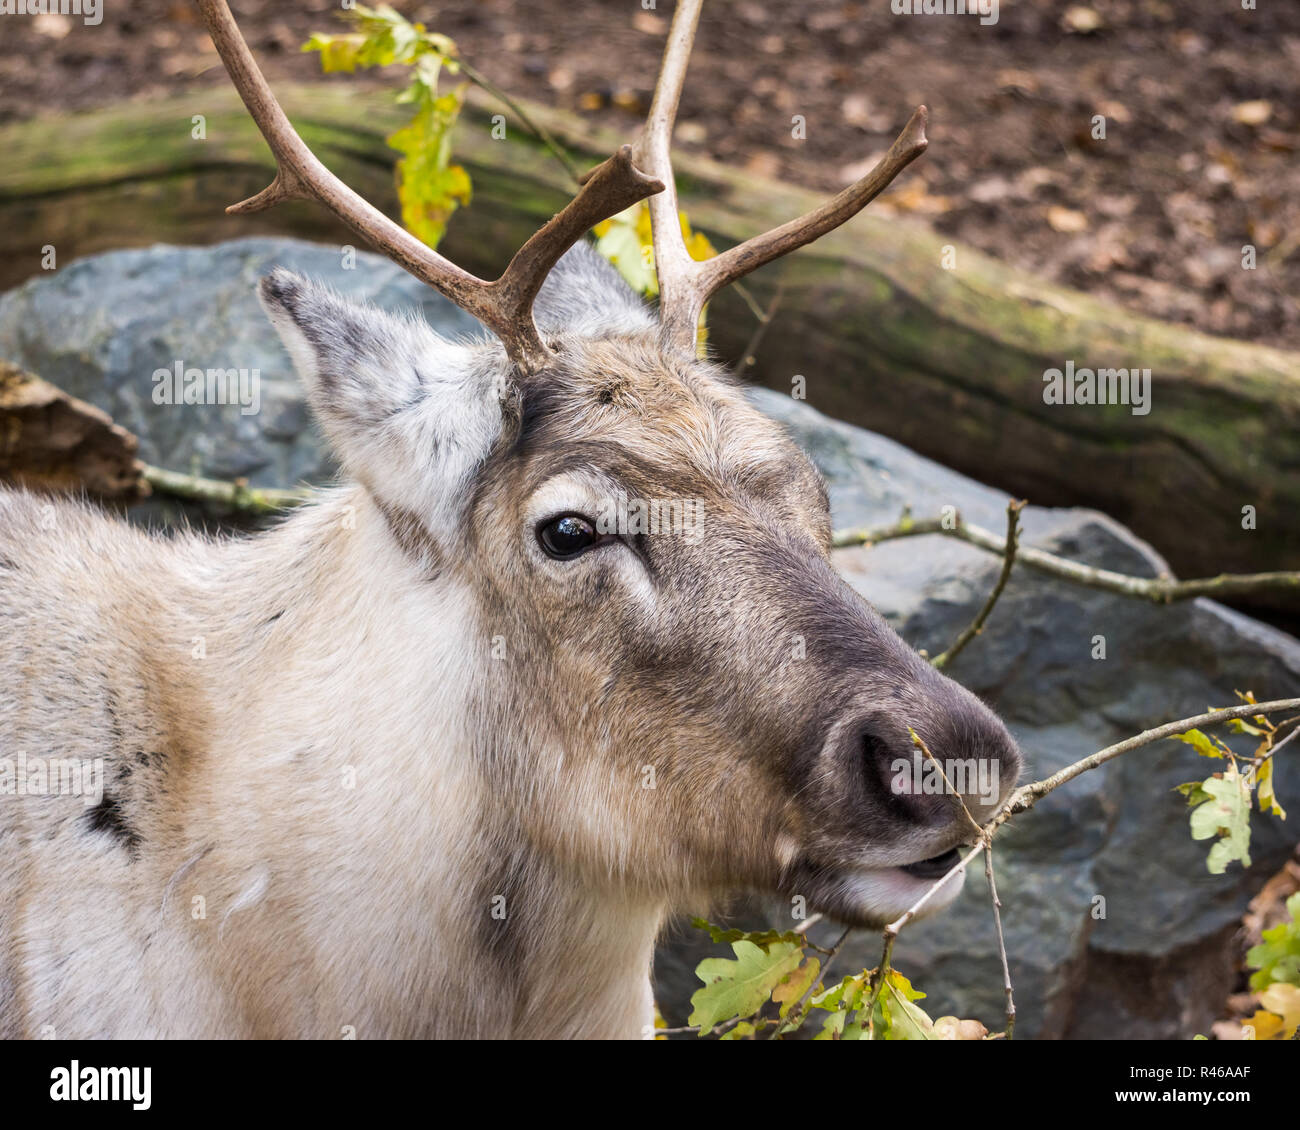 Portrait of a reindeer, rangifer tarandus, eating leaves. Stock Photo